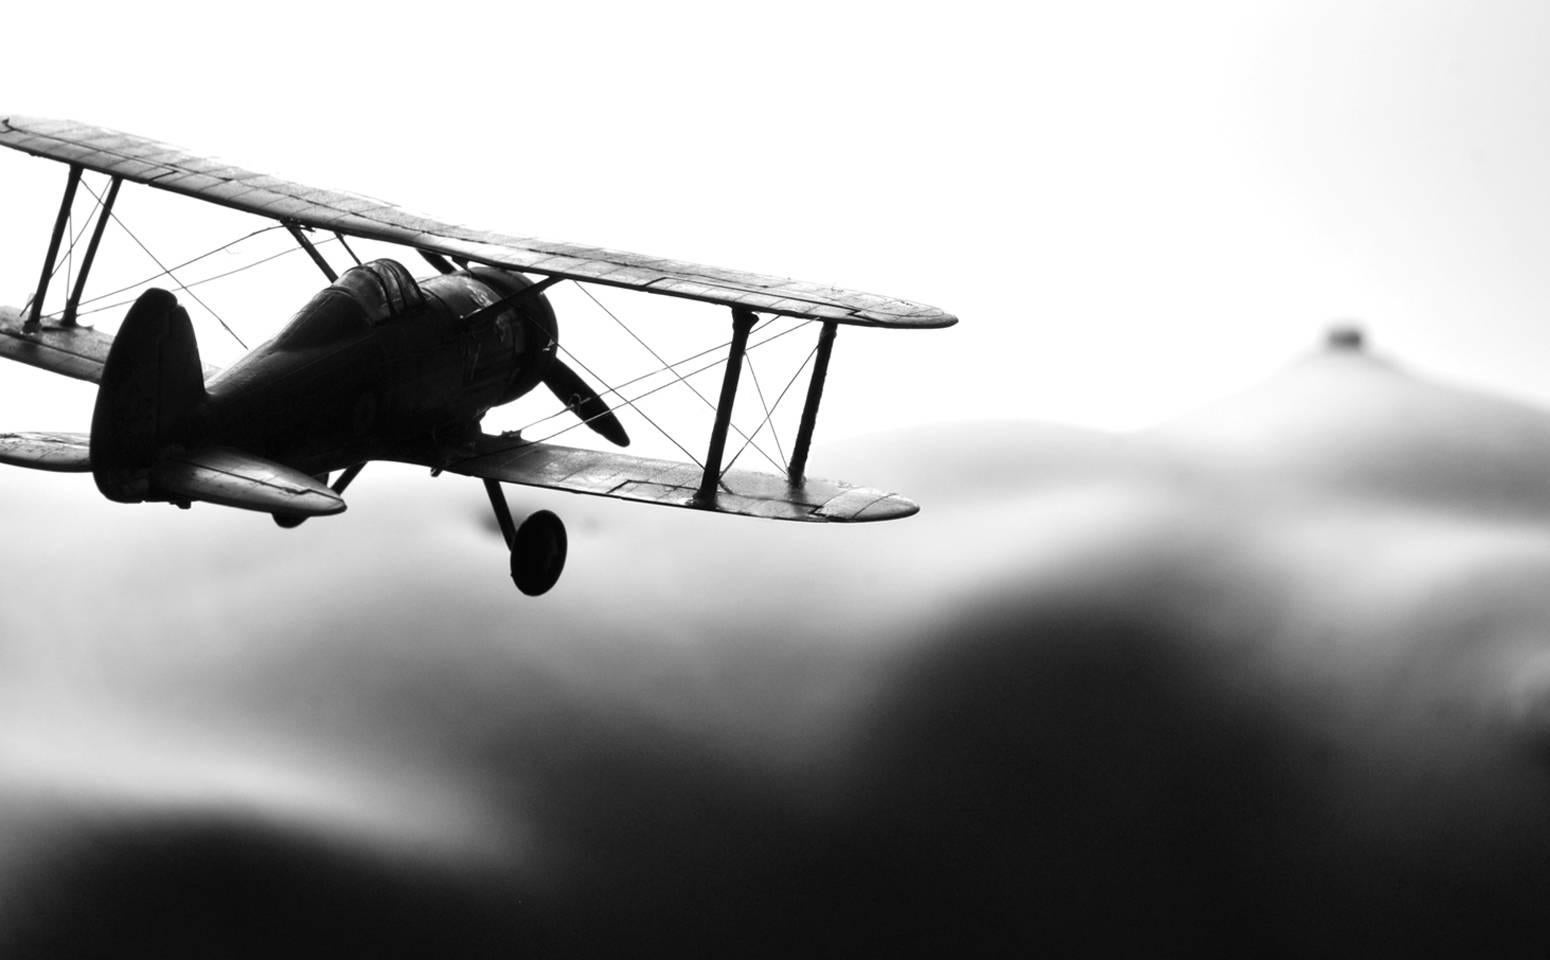 Black and White Photograph Allan I. Teger - L'avion